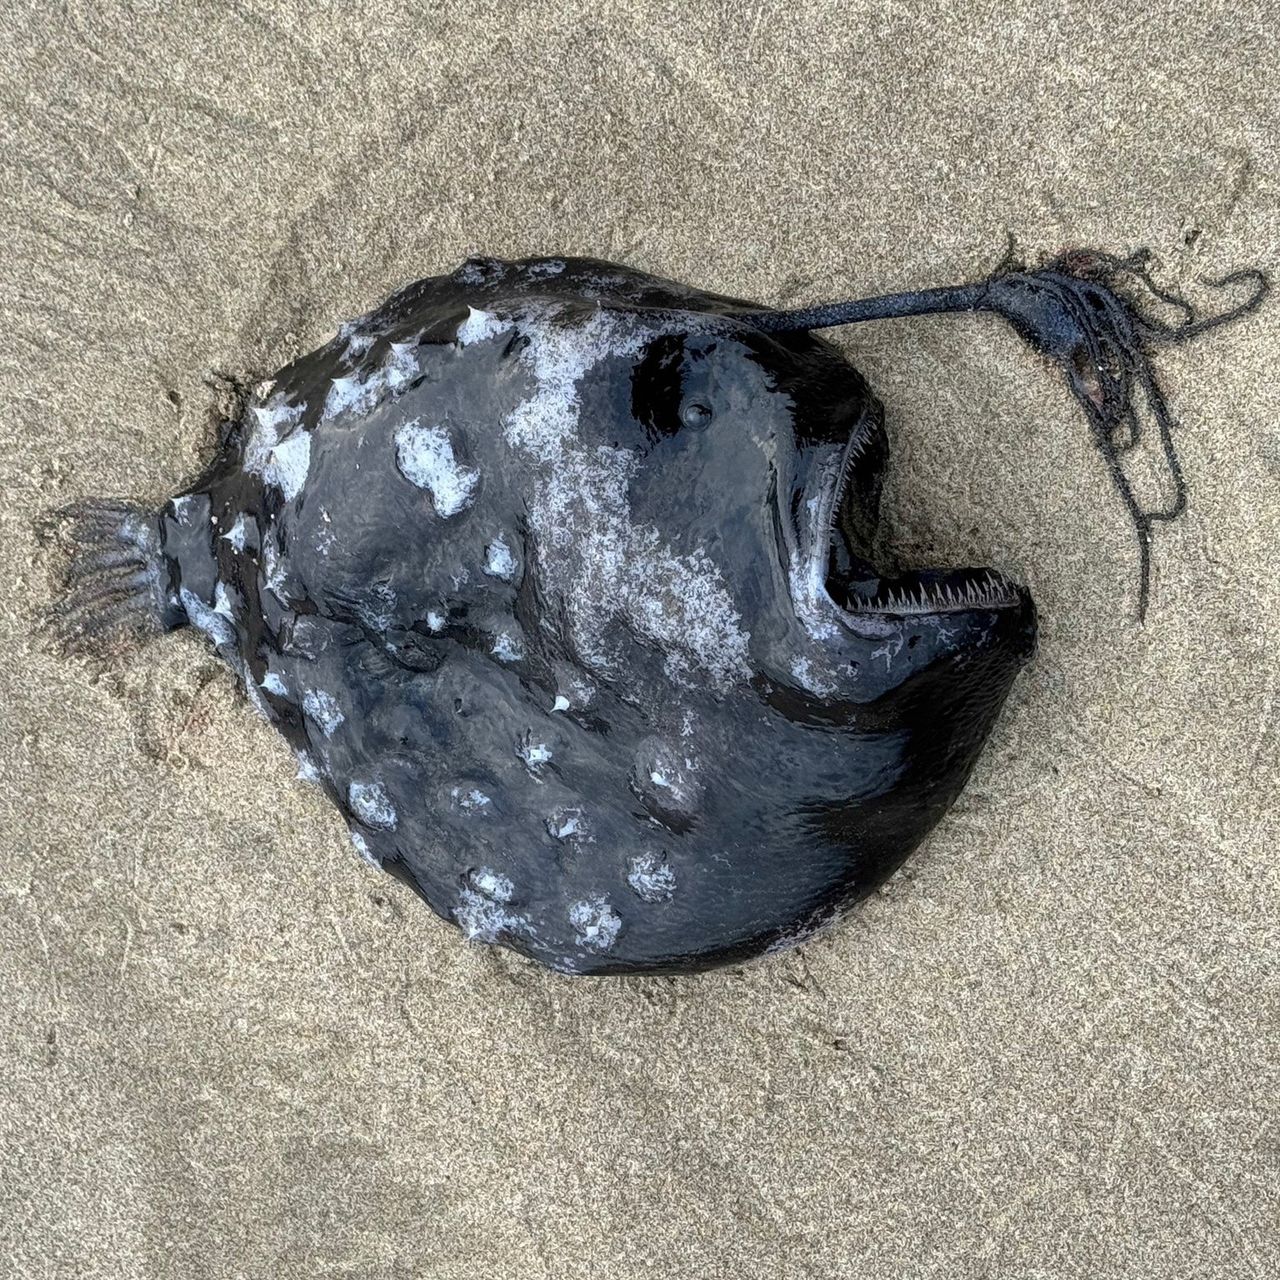 Rare deep-sea anglerfish discovered on Oregon beach